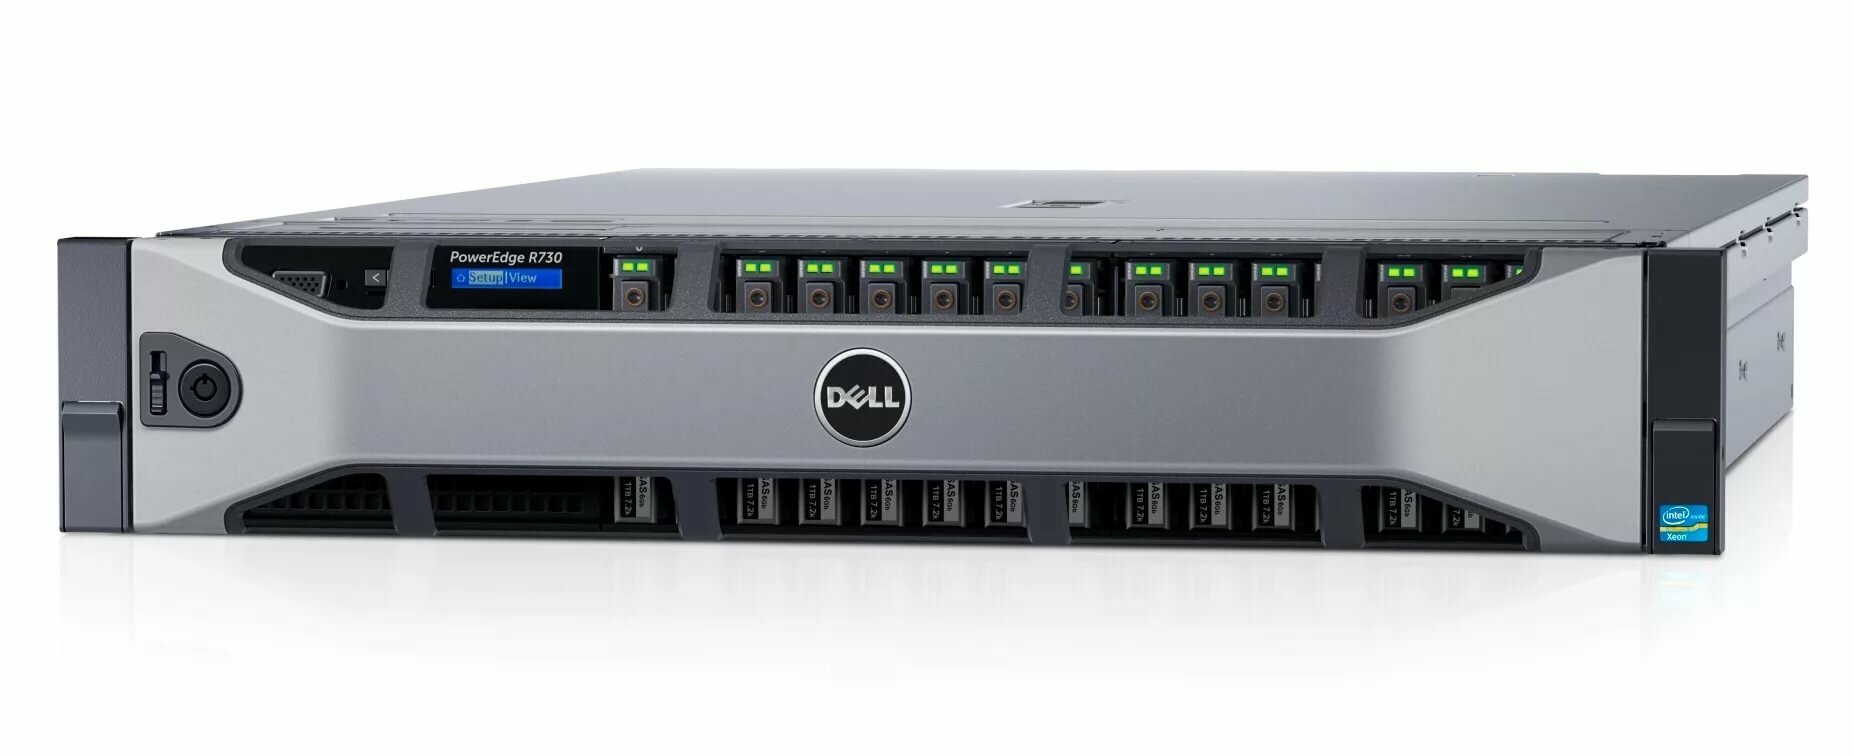 210-ACXU-175 Dell PowerEdge R730 (up to 8x2.5quot;), E5-2620v4 (2.1Ghz) 8C 20M 8GT/s 85W, 16GB (1x16GB) 2400 SV DR RDIMM, PERC H730 1GB, 1.2TB SAS 10k RPM 2.5quot; HDD, Broadcom 5720 QP DC 1Gbps, iDRAC8 Enterprise, PS 750W